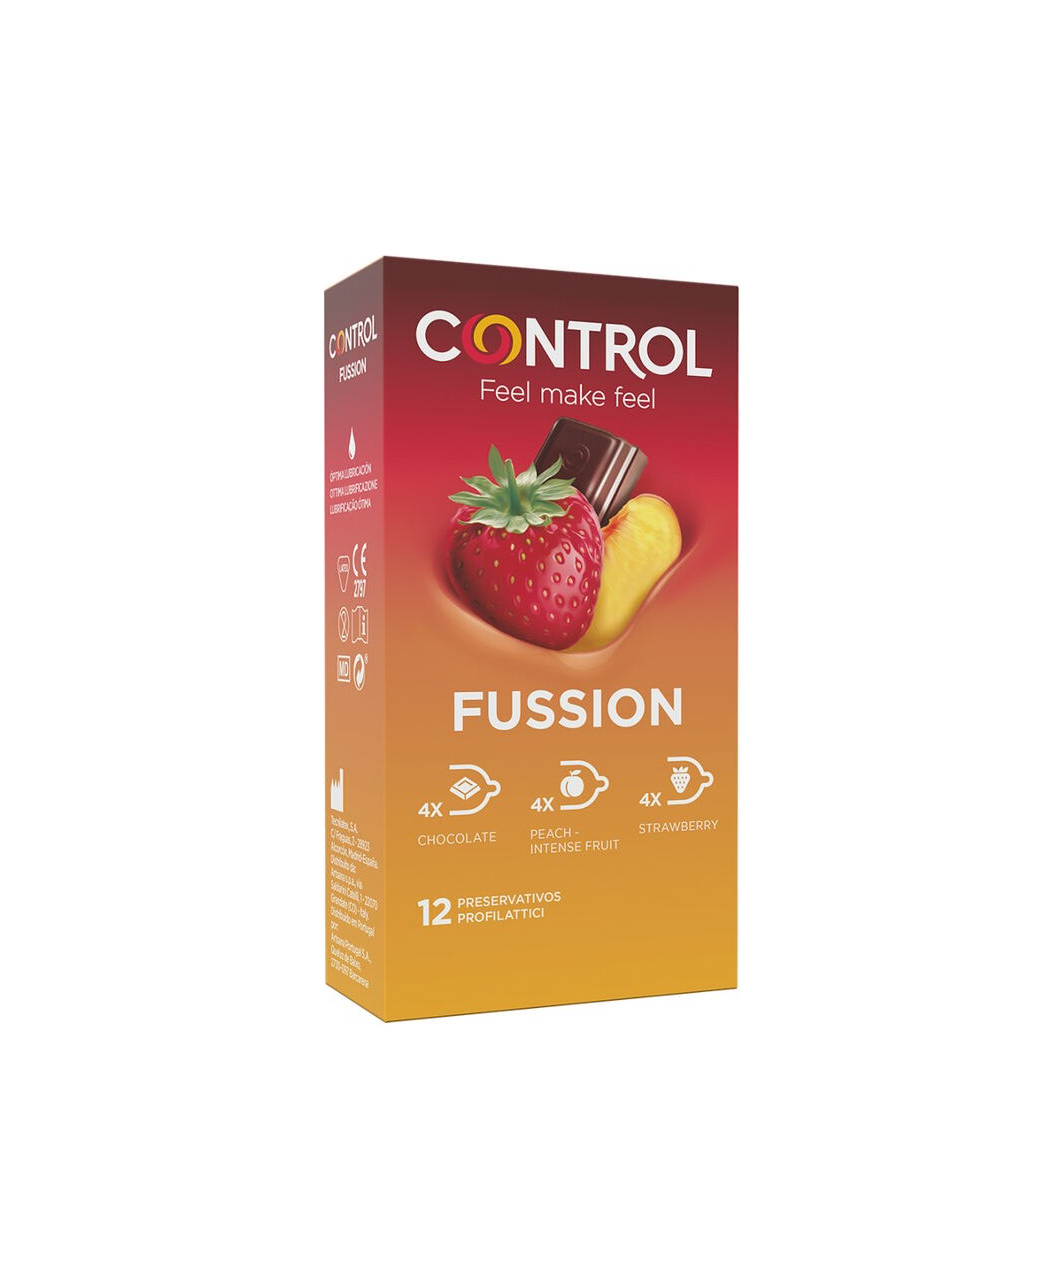 Control Fussion (12 pcs)